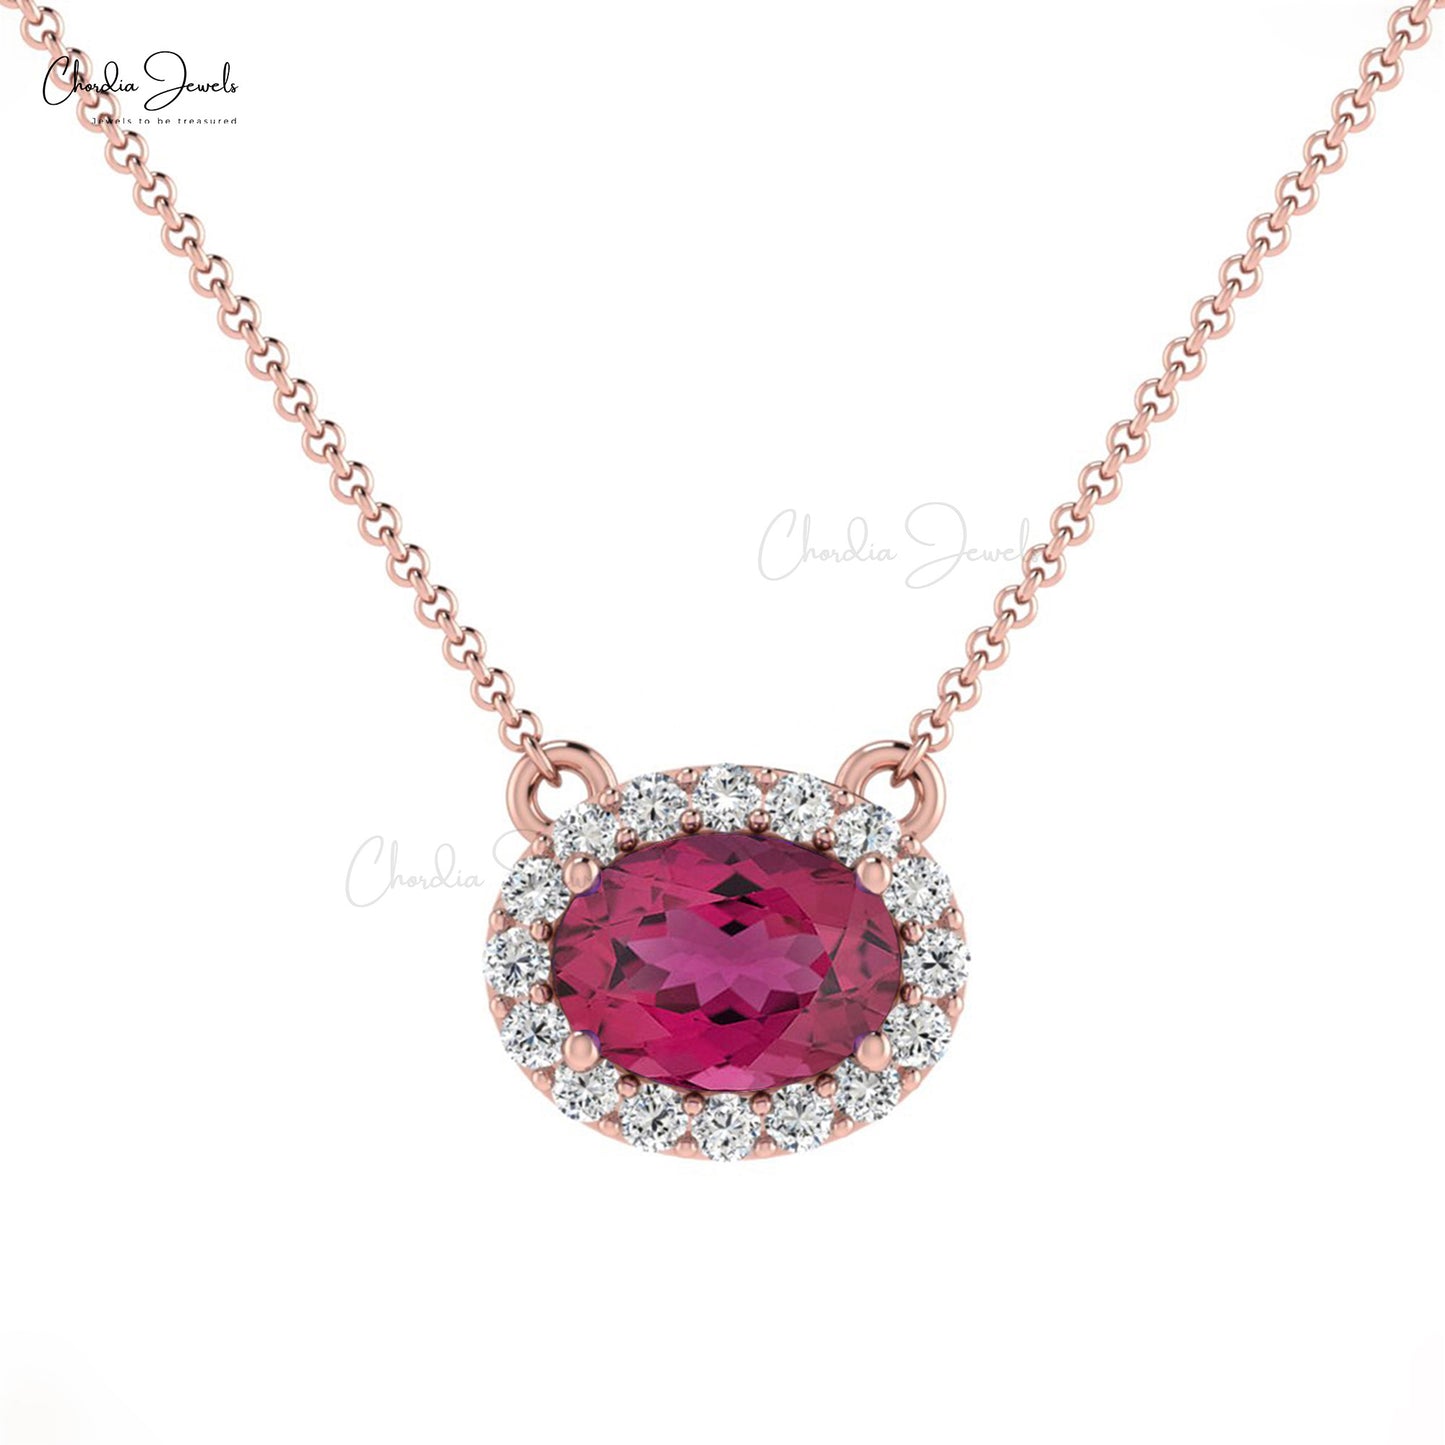 Diamond Halo Necklace with Oval Shaped Pink Tourmaline Stone